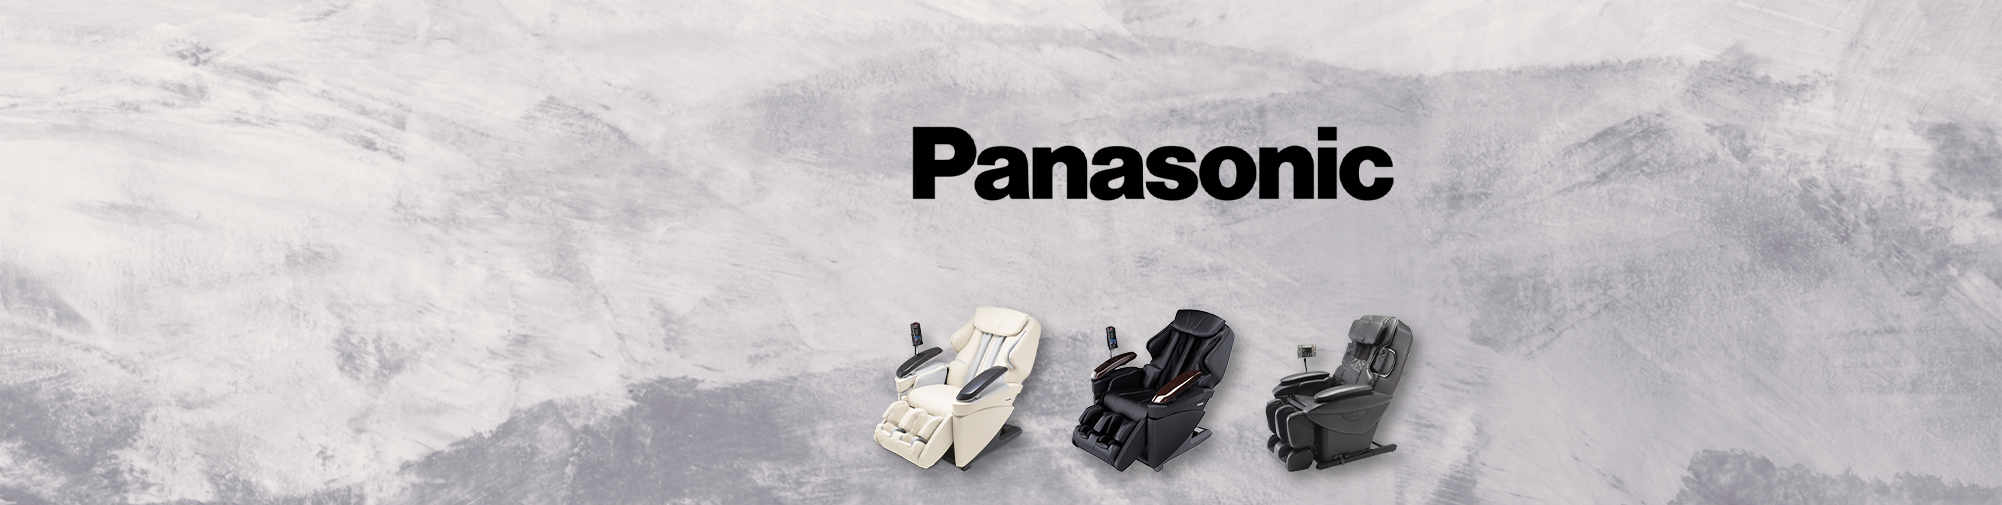 Panasonic Massage Chair Massage Chair World